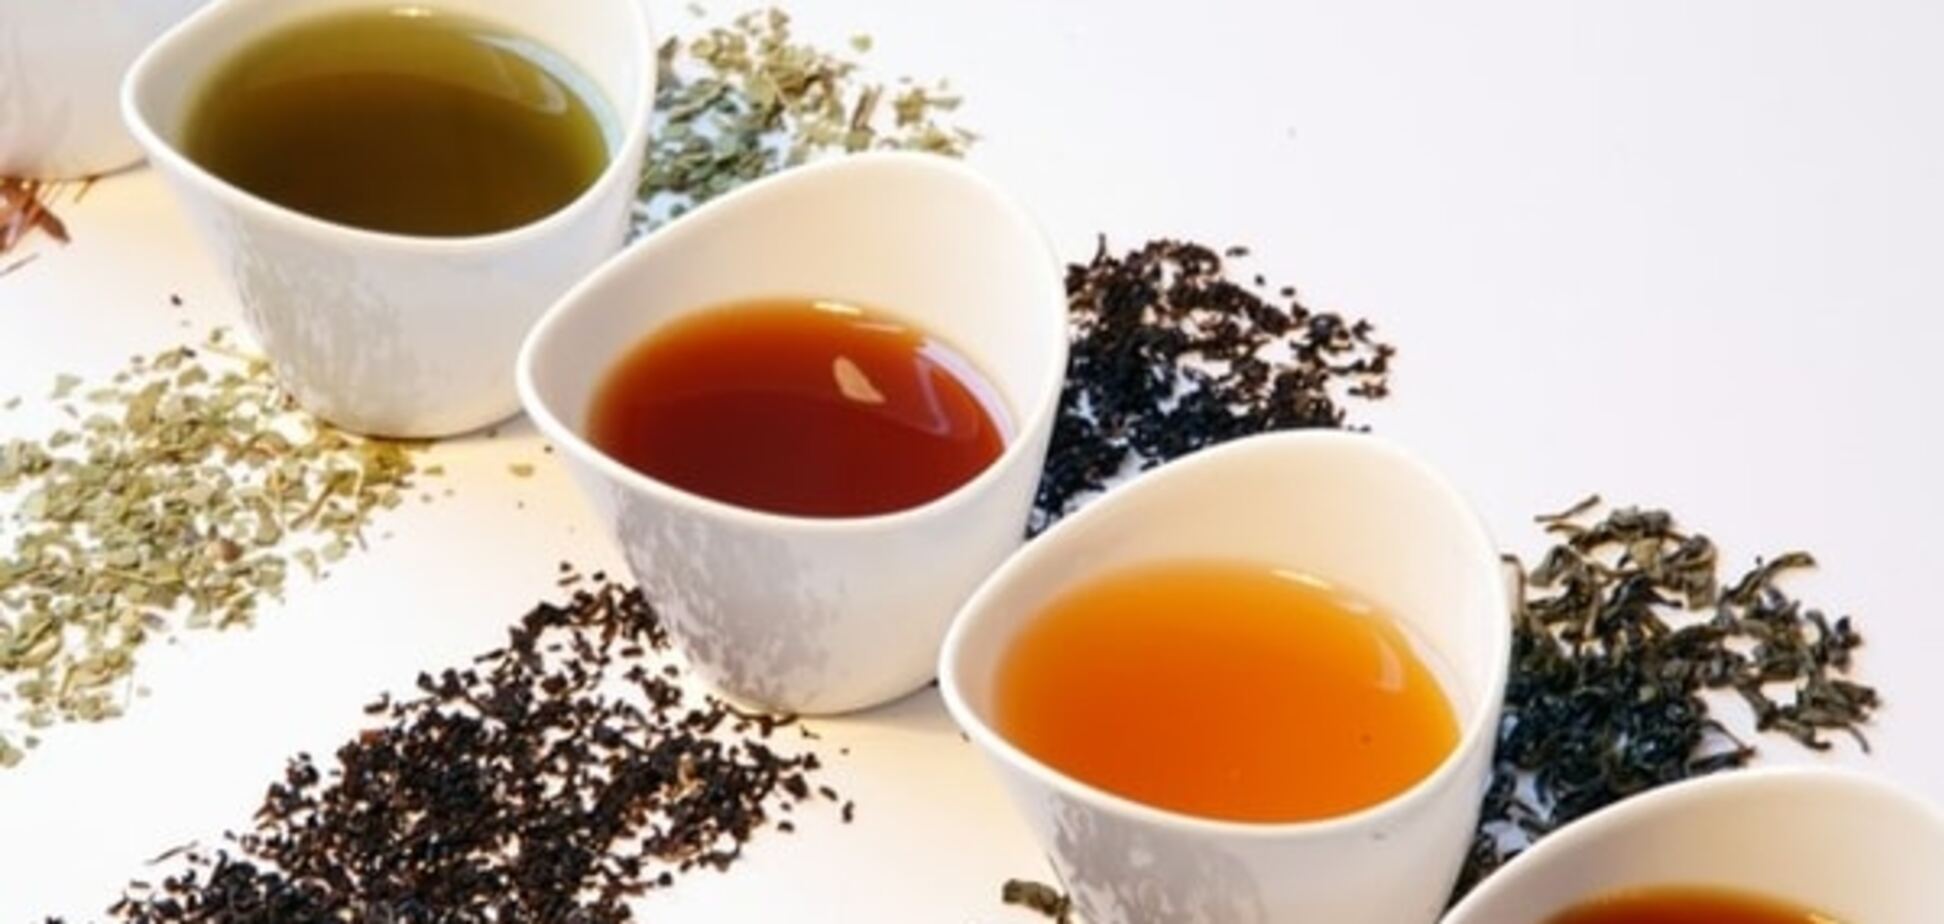 Лучшие рецепты травяных чаев